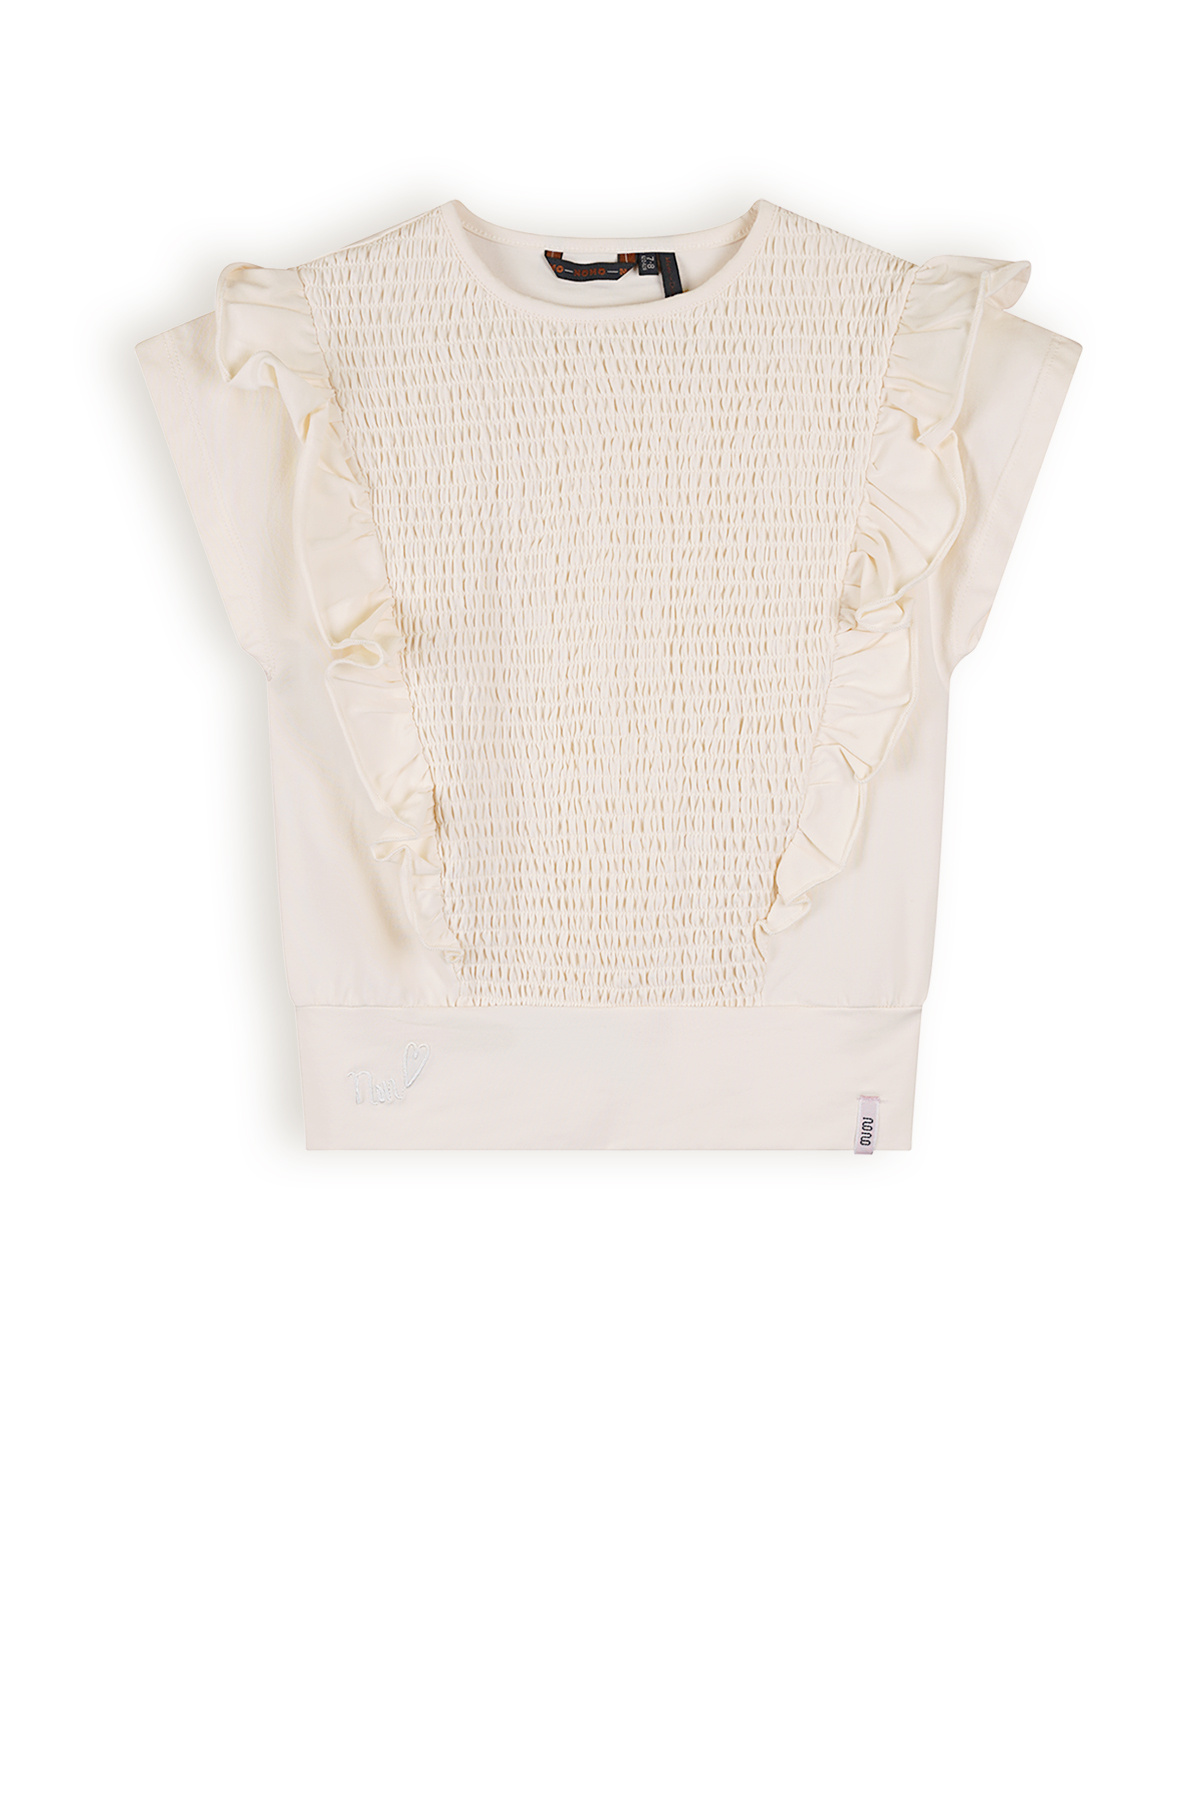 Meisjes t-shirt smock - Kety - Pearled ivoor wit